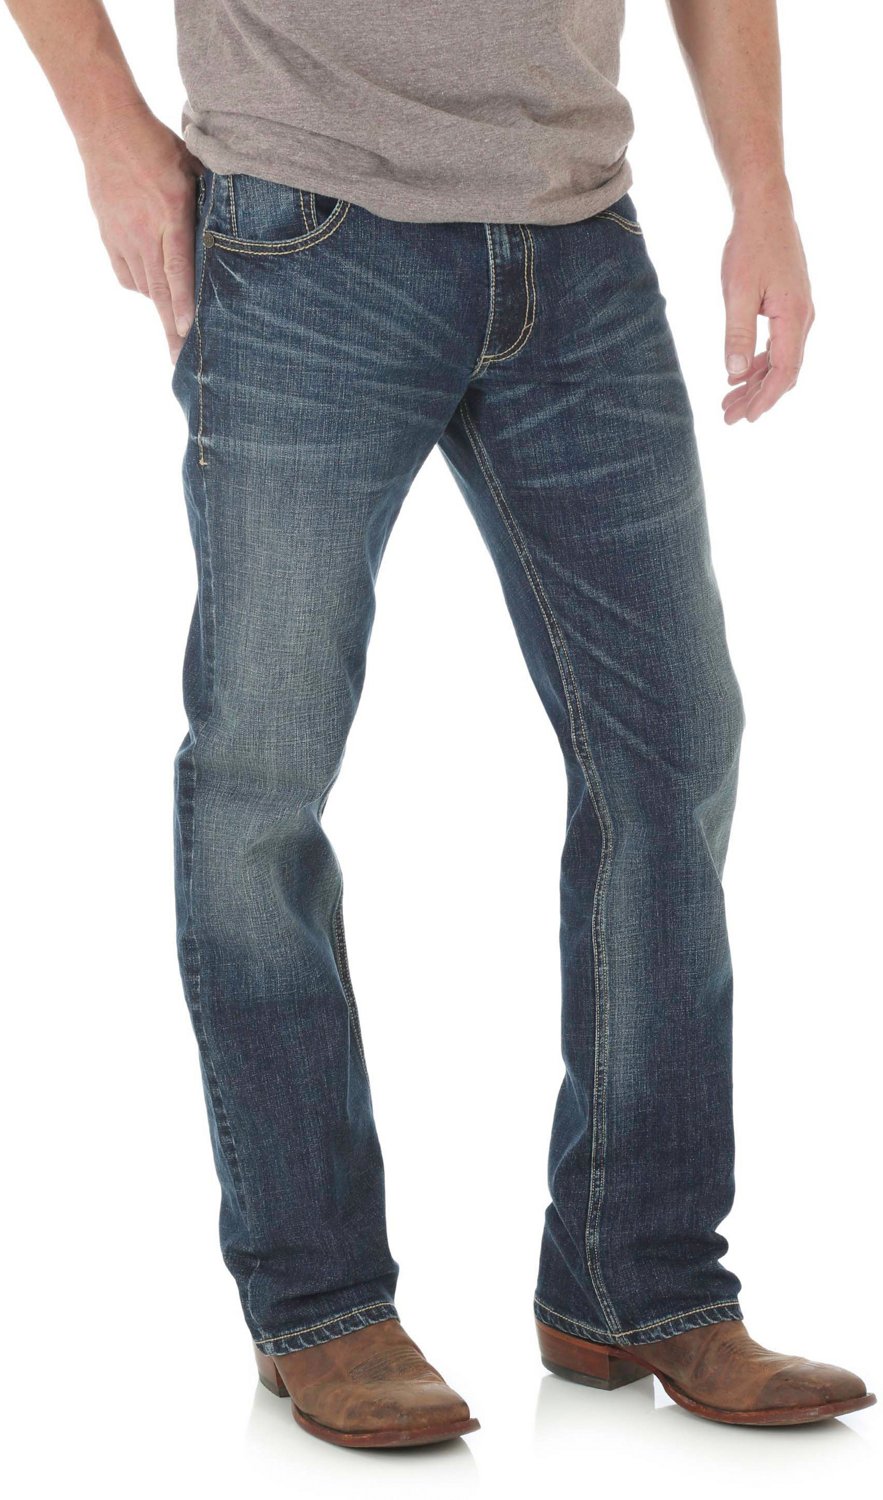 Wrangler Men's Tall Size Retro Slim Fit Boot Cut Jean, River Wash